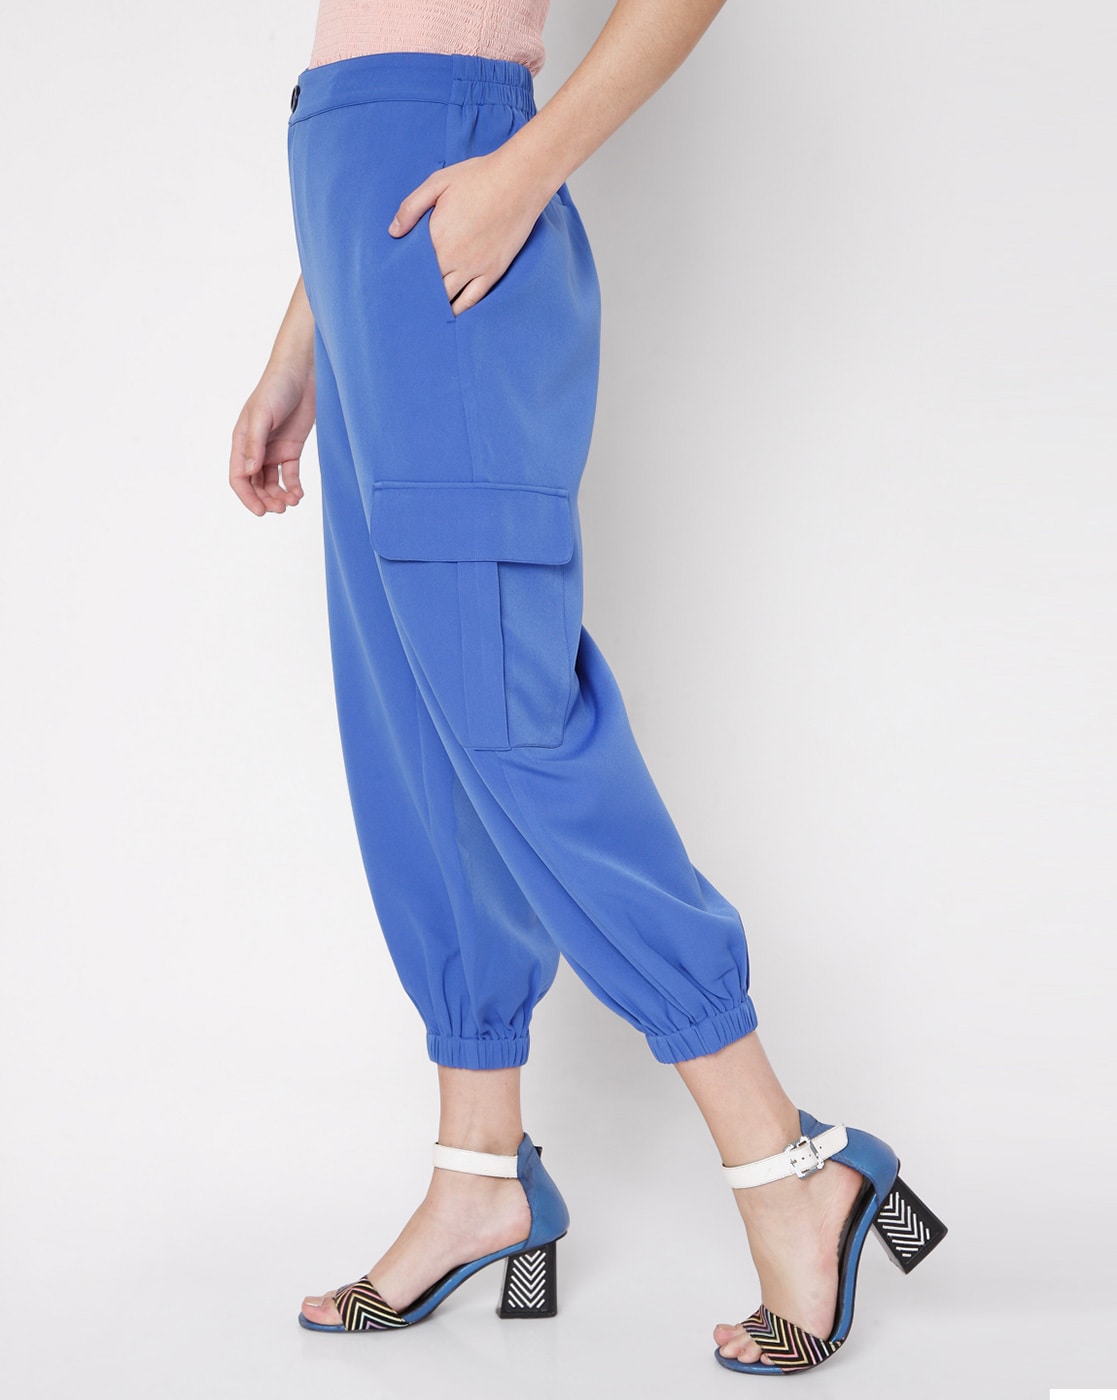 Get Basic Solid Blue Elasticated Waist Harem Pants at  649  LBB Shop